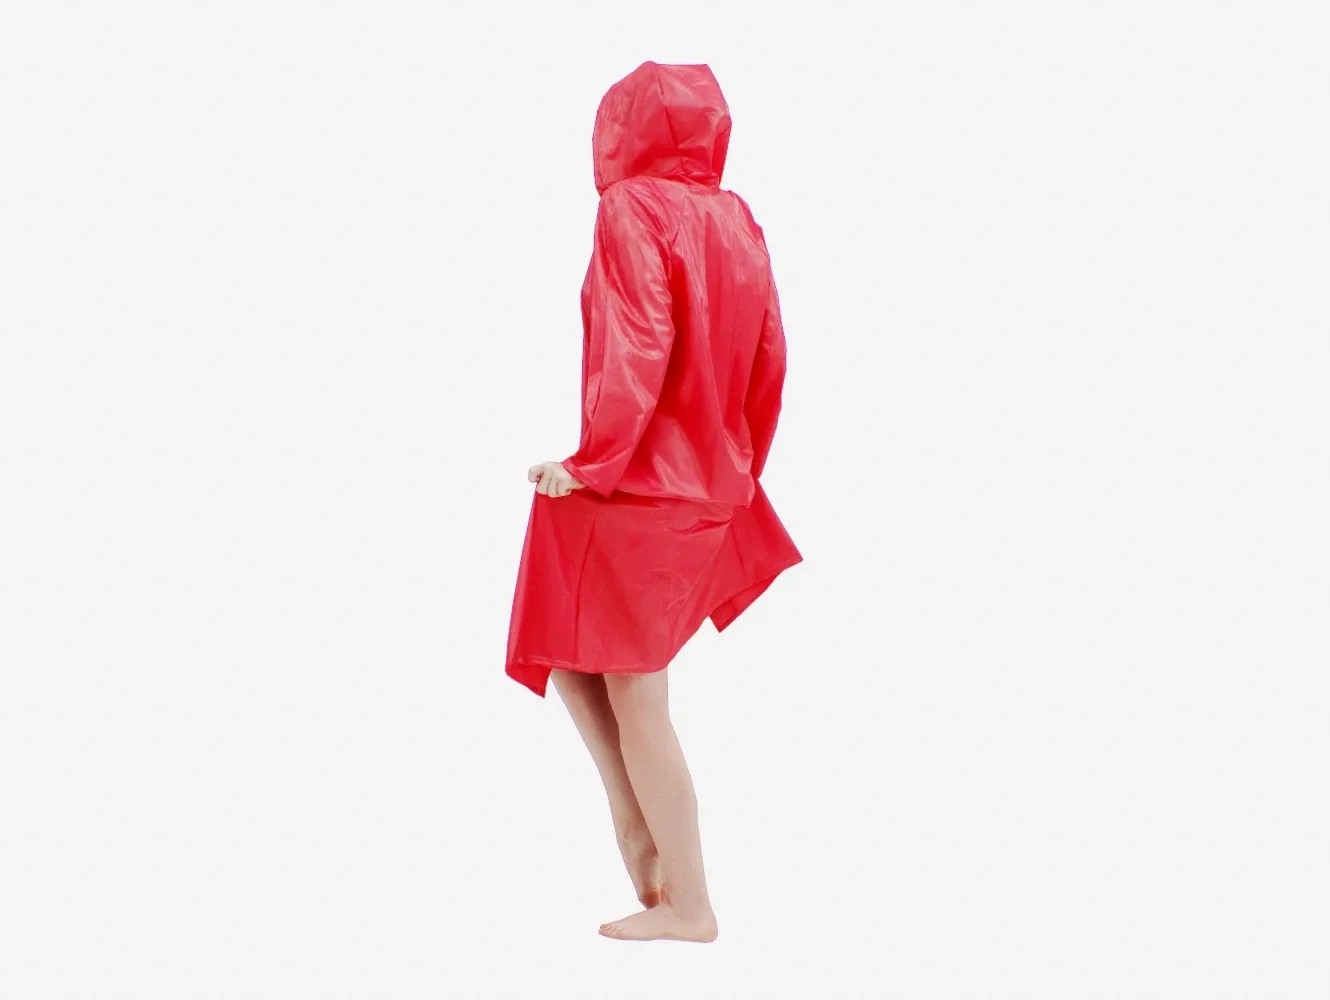 Realistic 3D Scanned Model of a Woman - Raincoat 008